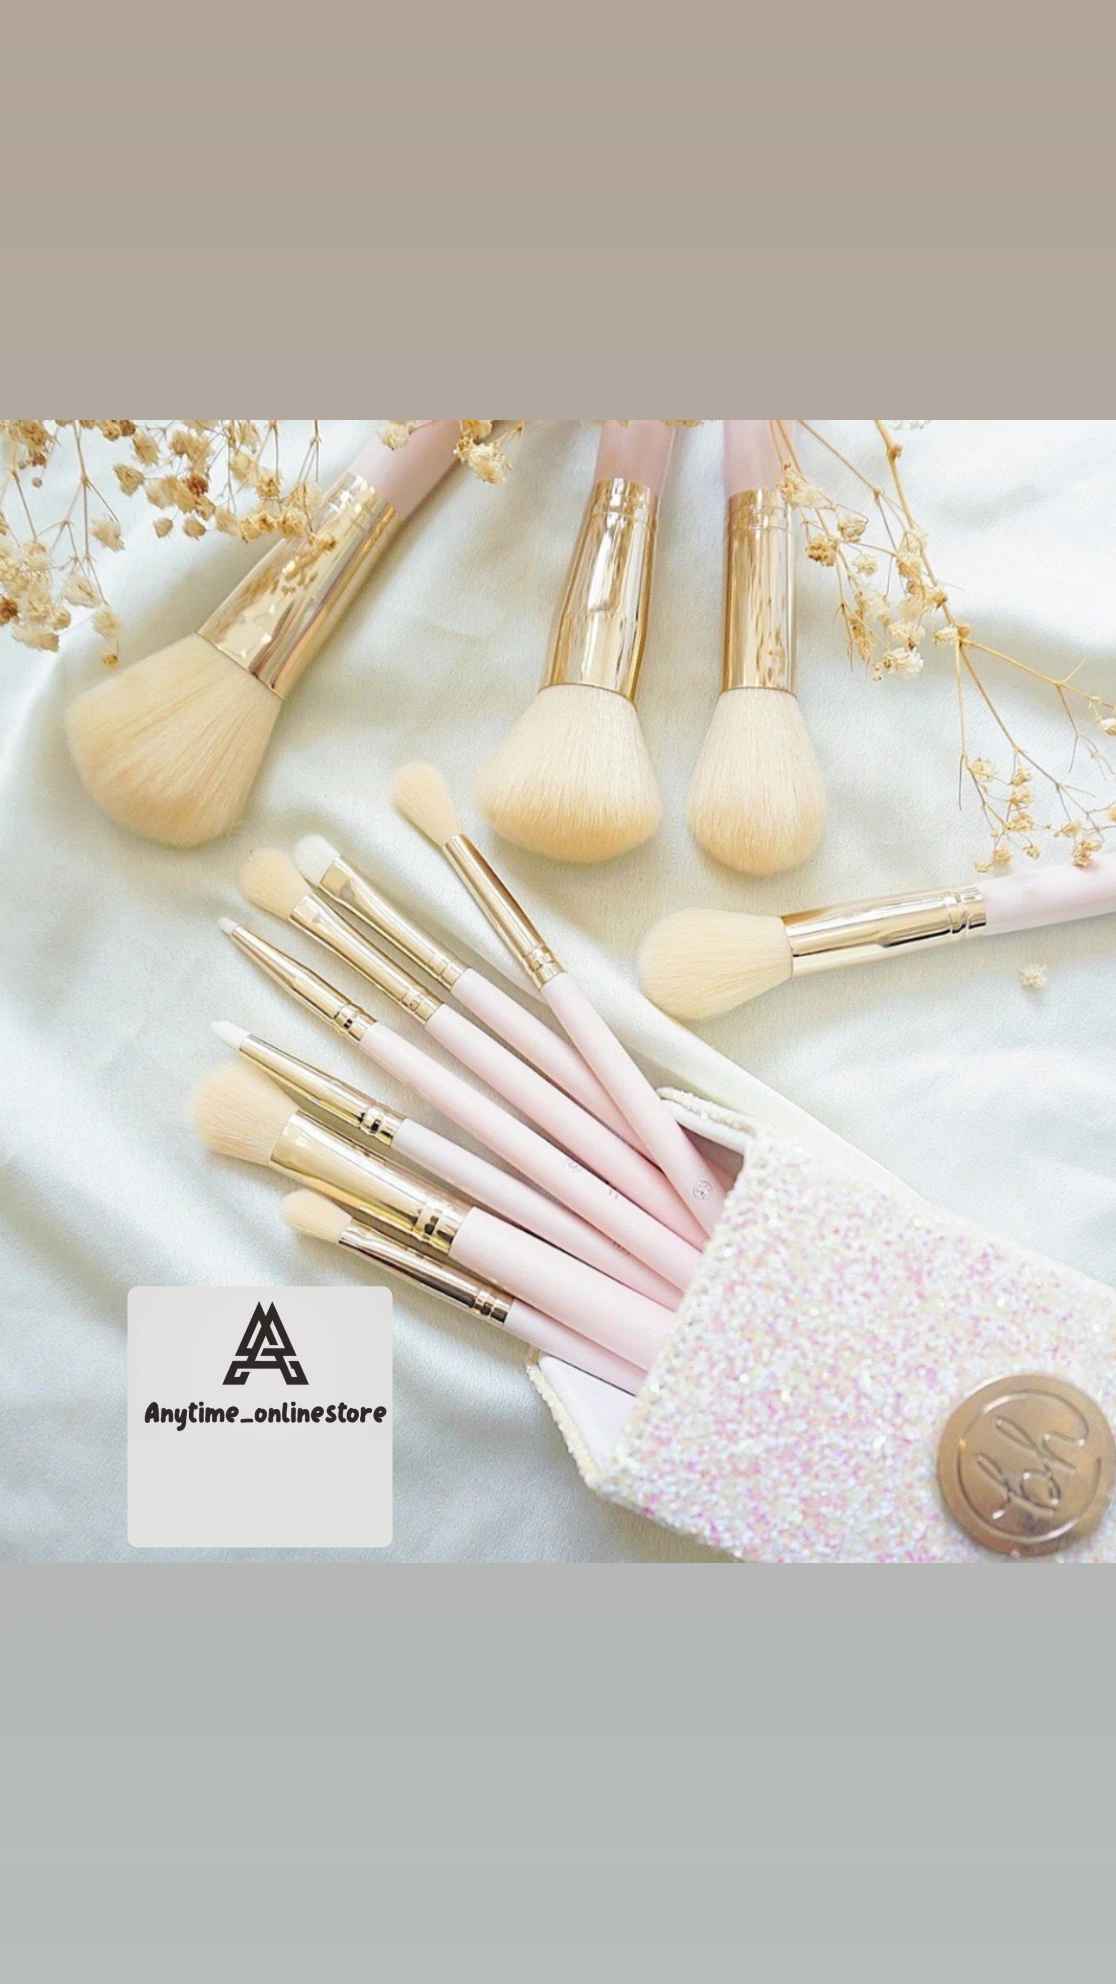 Bh cosmetics fairy lights brush set 